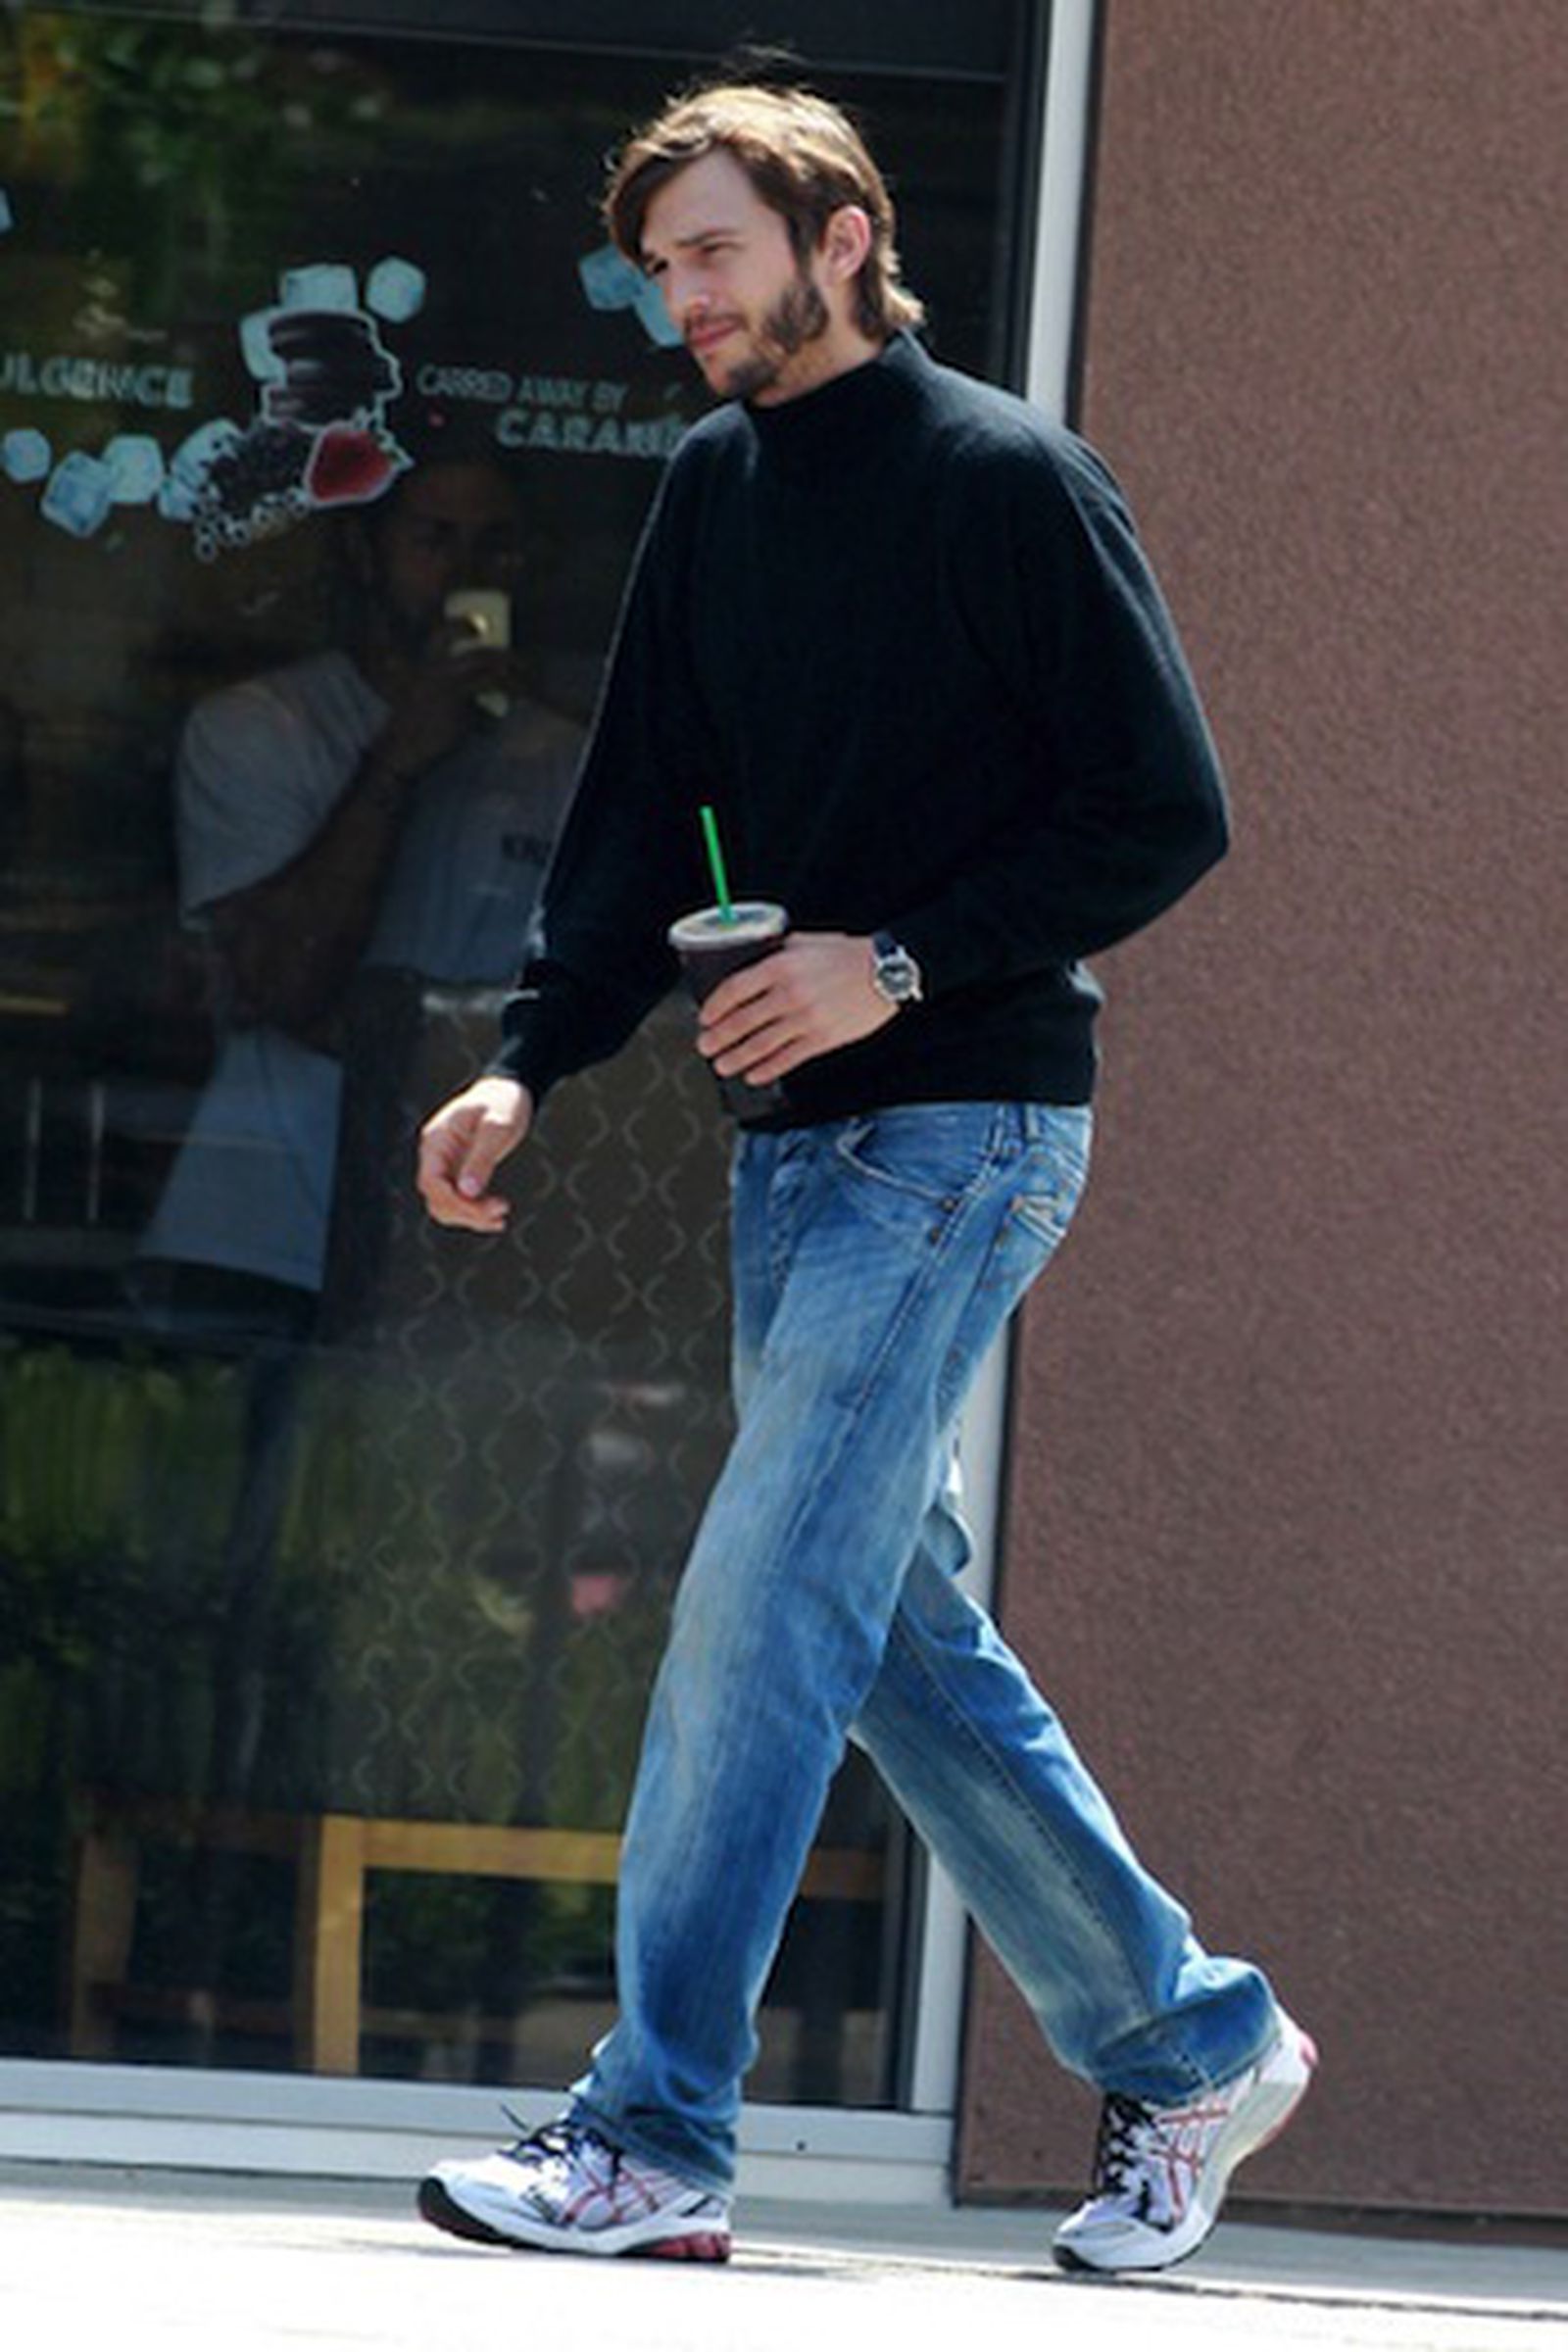 Ashton Kutcher Spotted Wearing Steve Jobs' Trademark Wardrobe - MacRumors